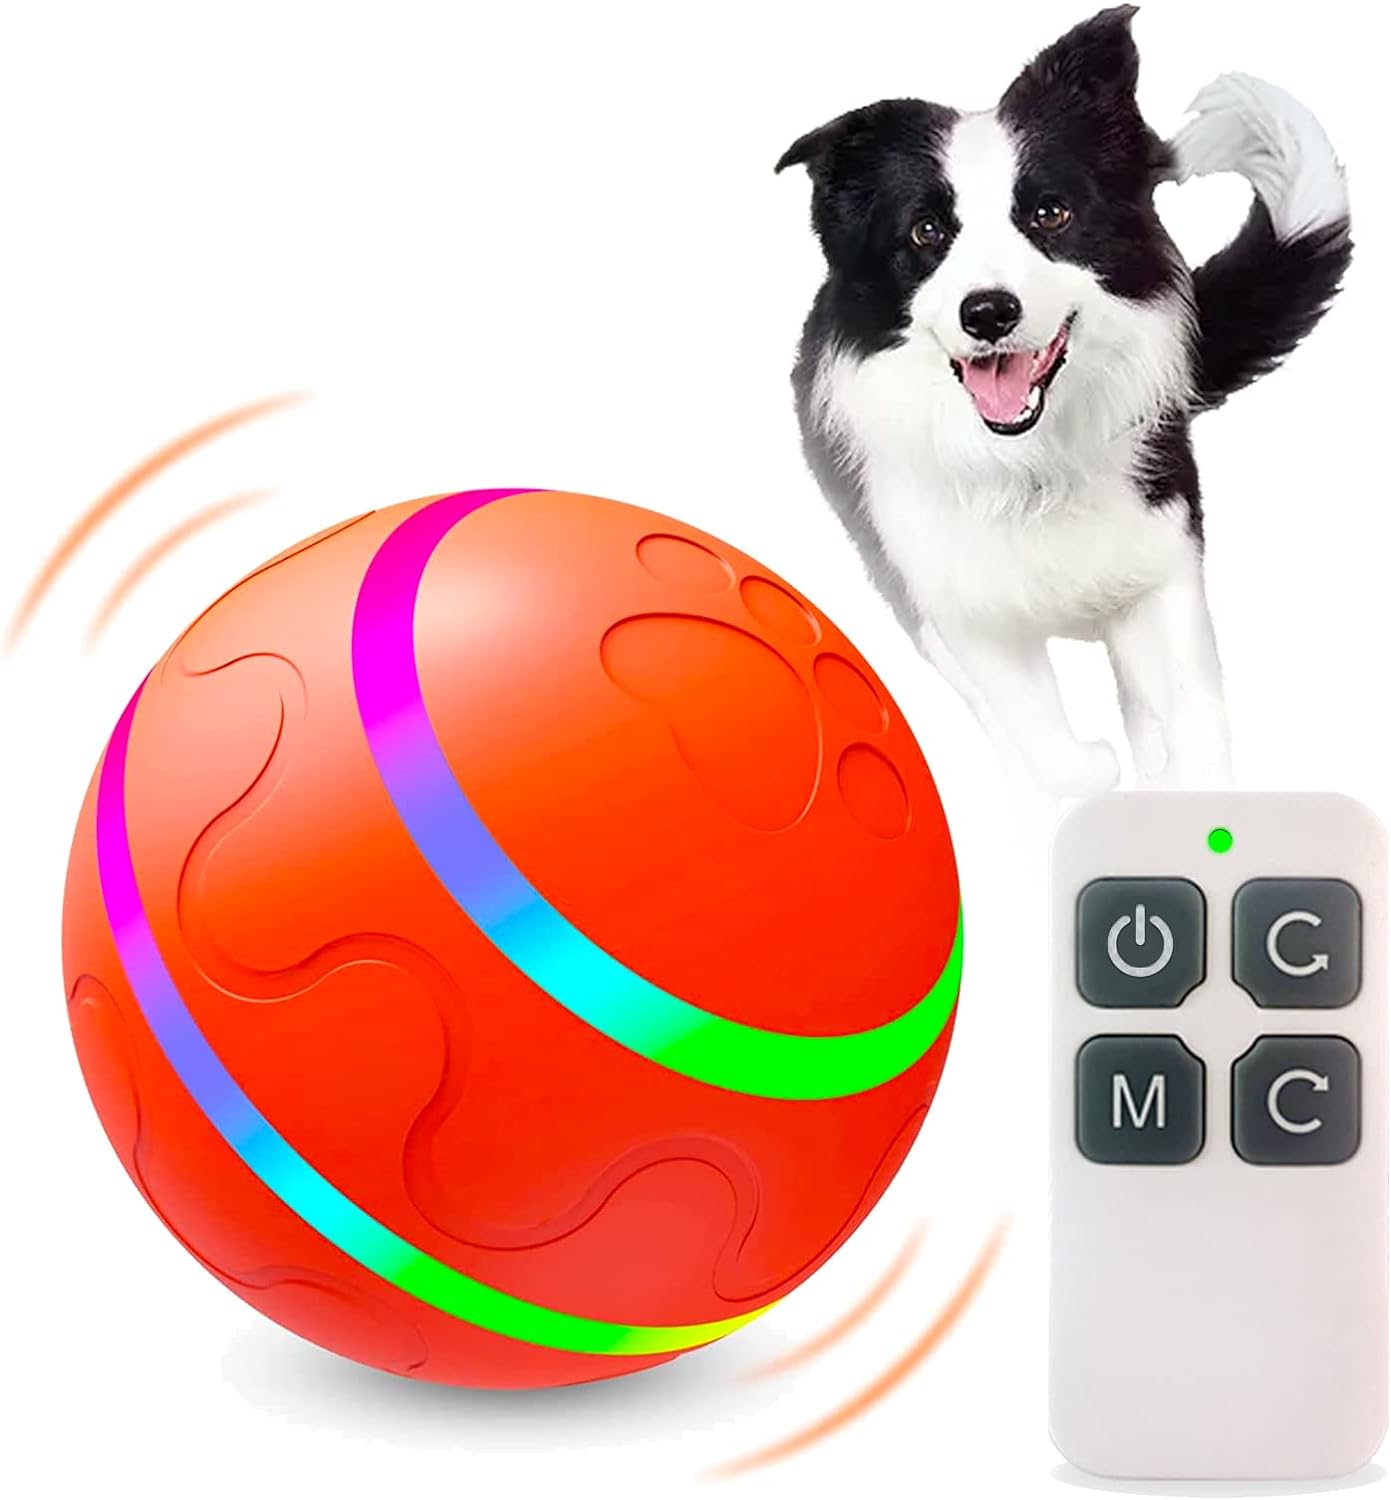  MOXAS Juguetes interactivos para perros, bola rodante